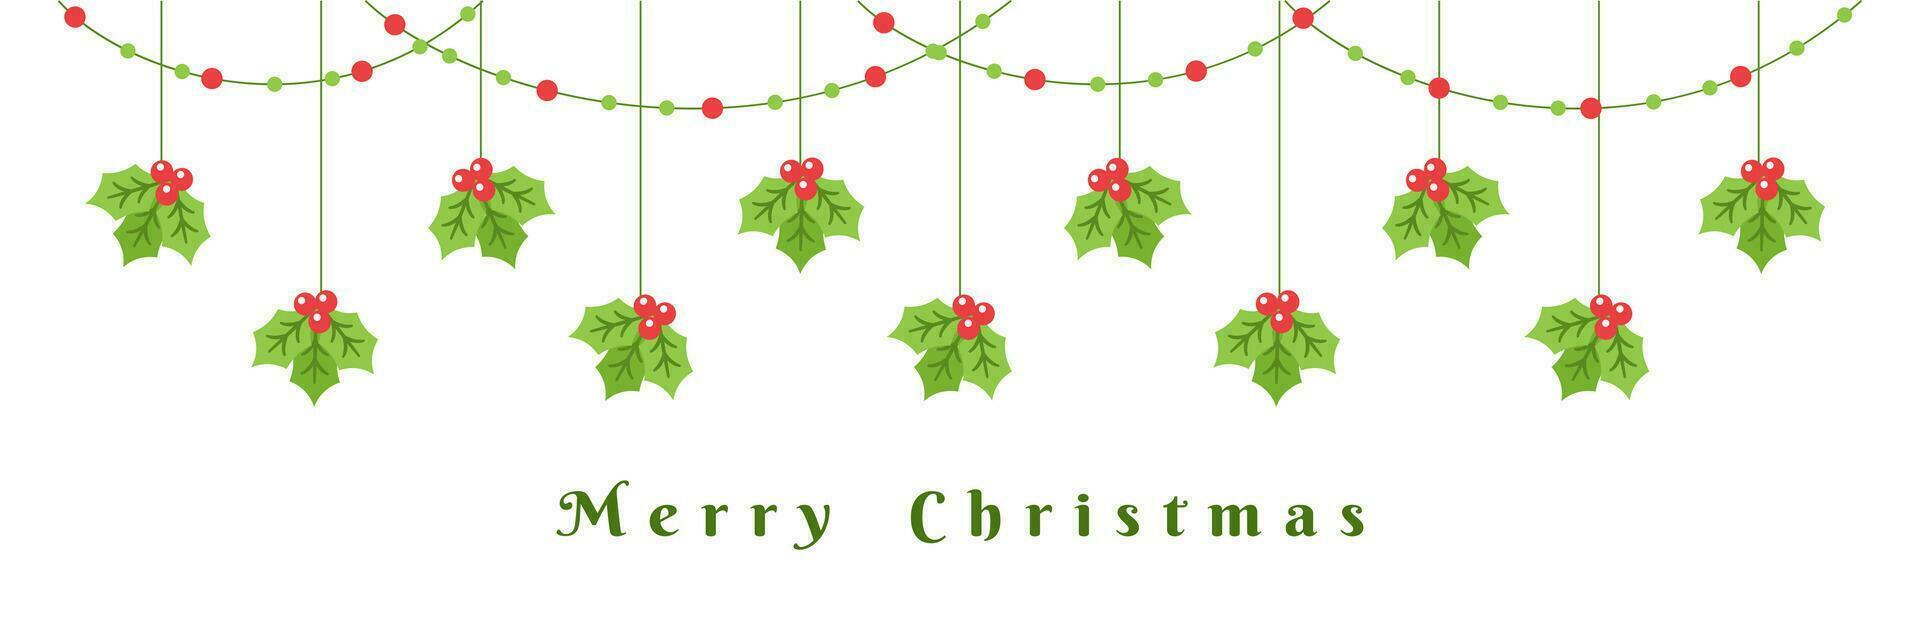 Merry Christmas Border Banner, Hanging Mistletoe Garland. Winter Holiday Season Header Decoration. Vector illustration.